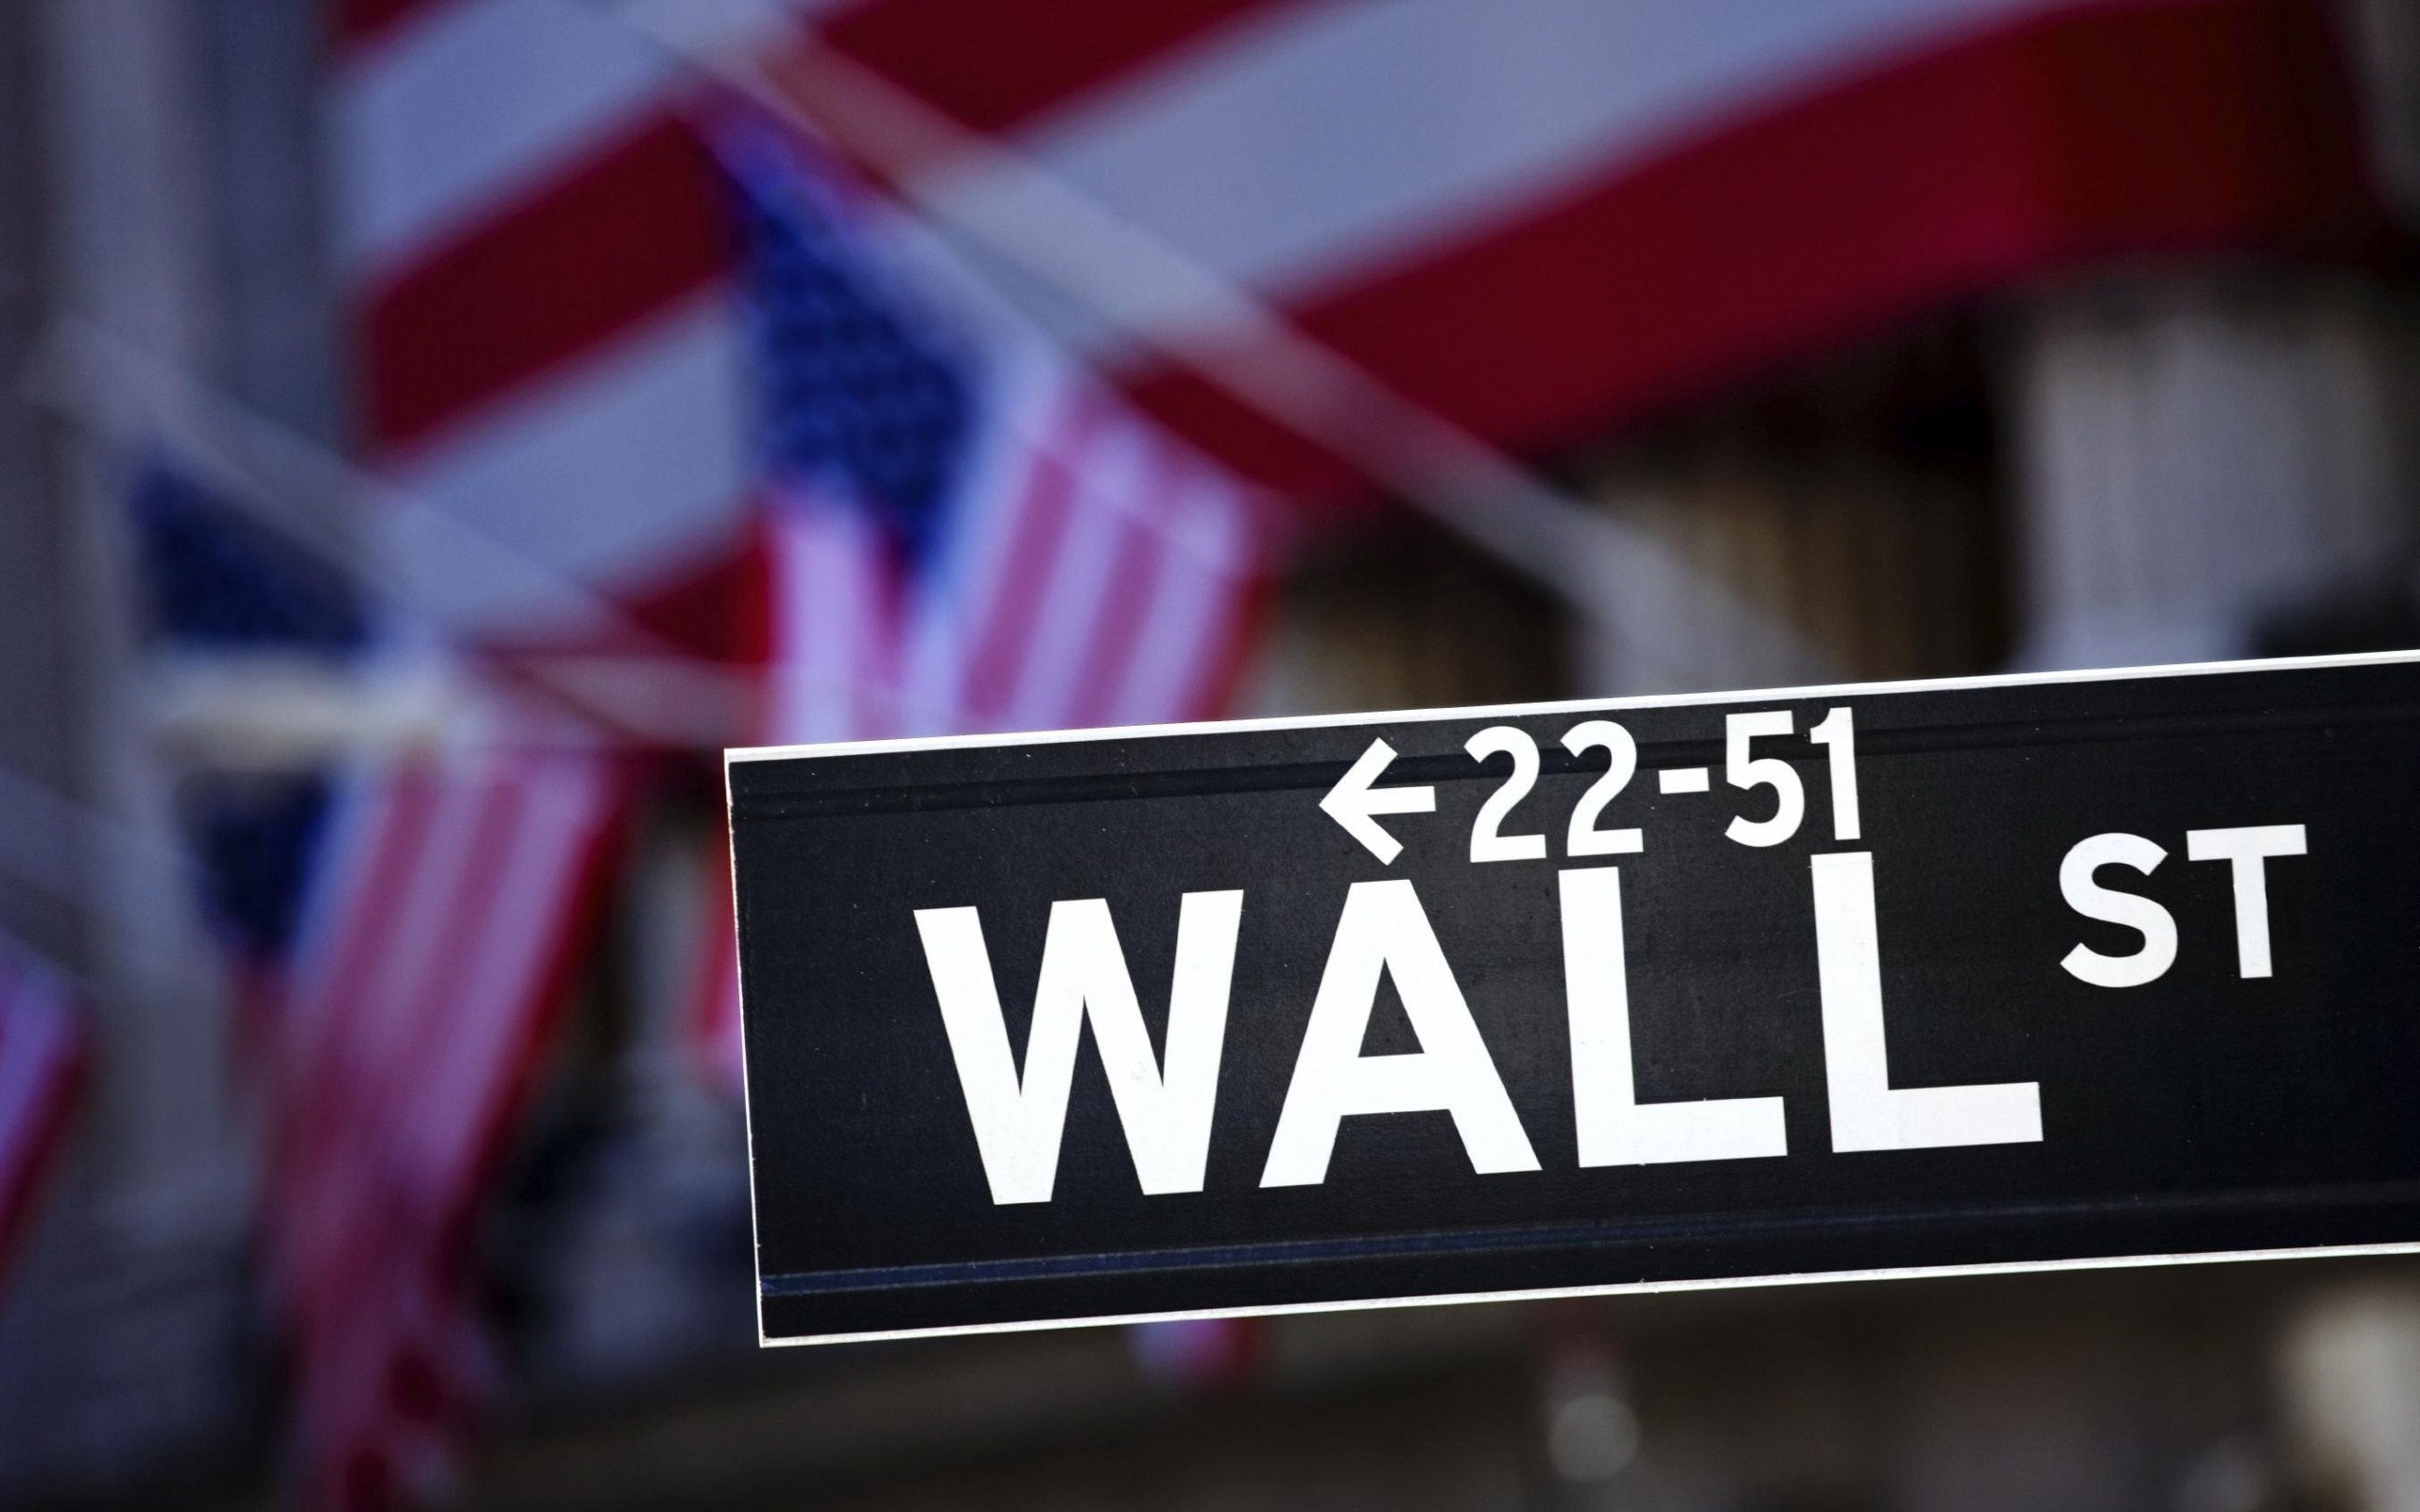 Wall Street Wallpaper HD - WallpaperSafari